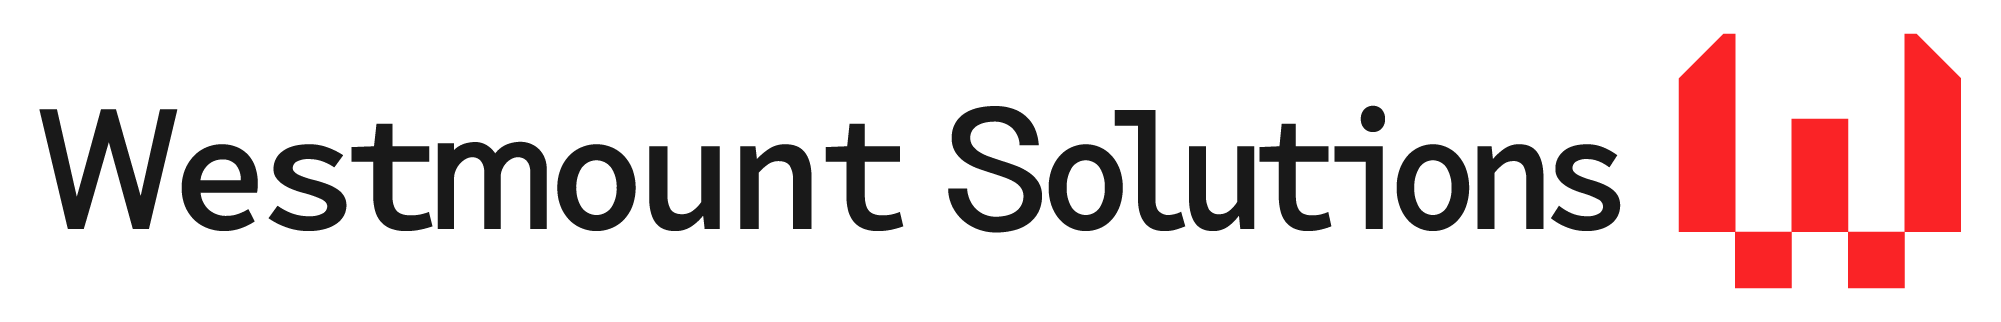 Westmount Solutions, Inc. Logo